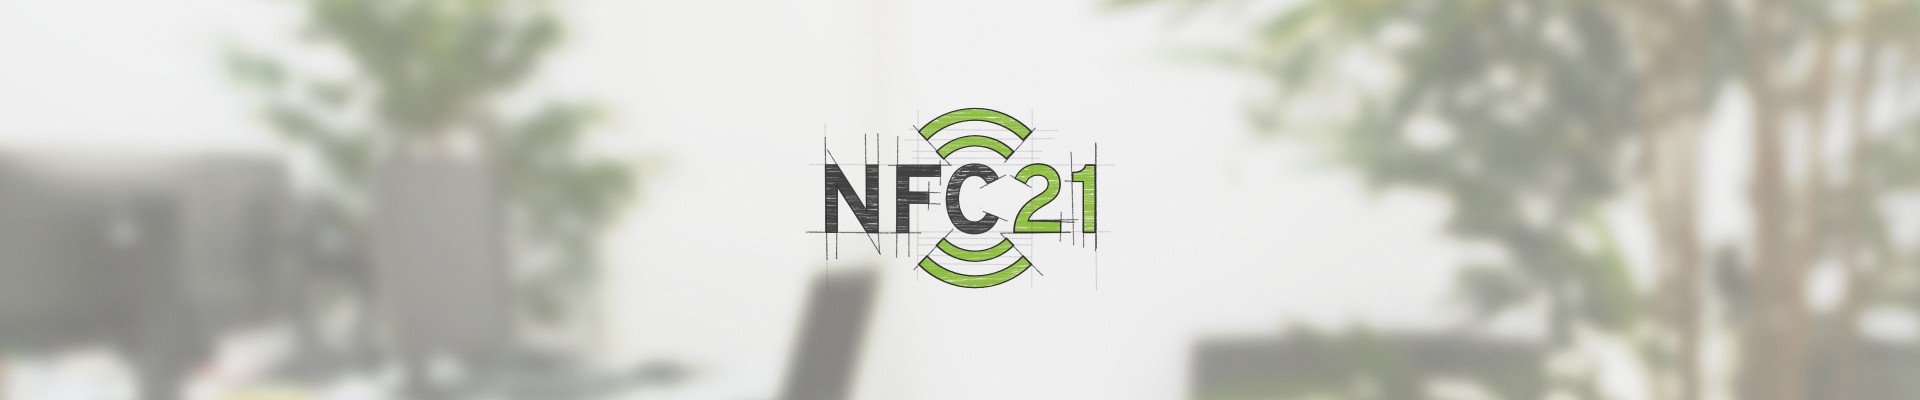 Factsheet NFC21 GmbH